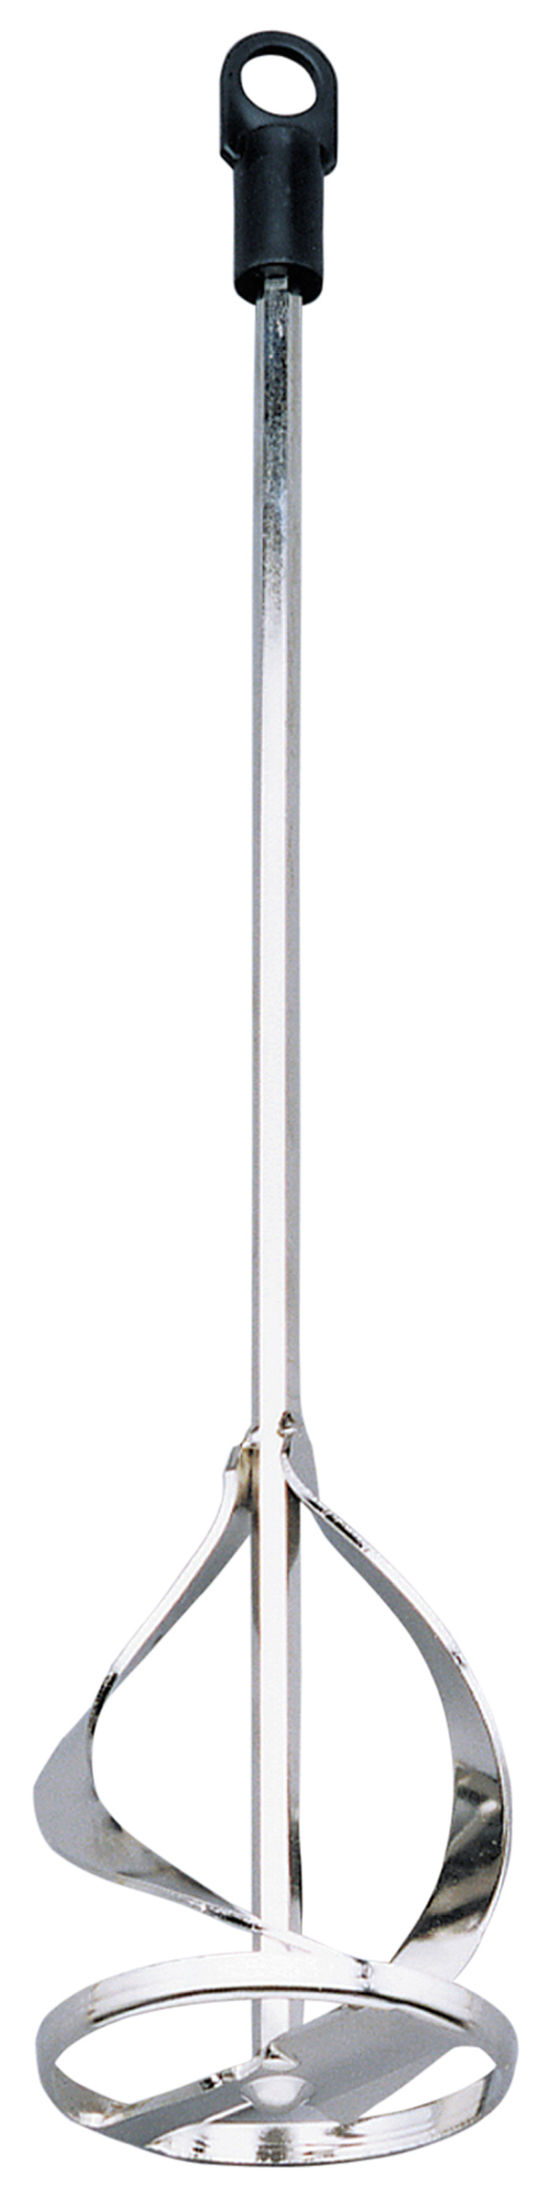 Hexomixer Paint Mixer Length 30", Diameter 5.6" Rod Size 1/2"